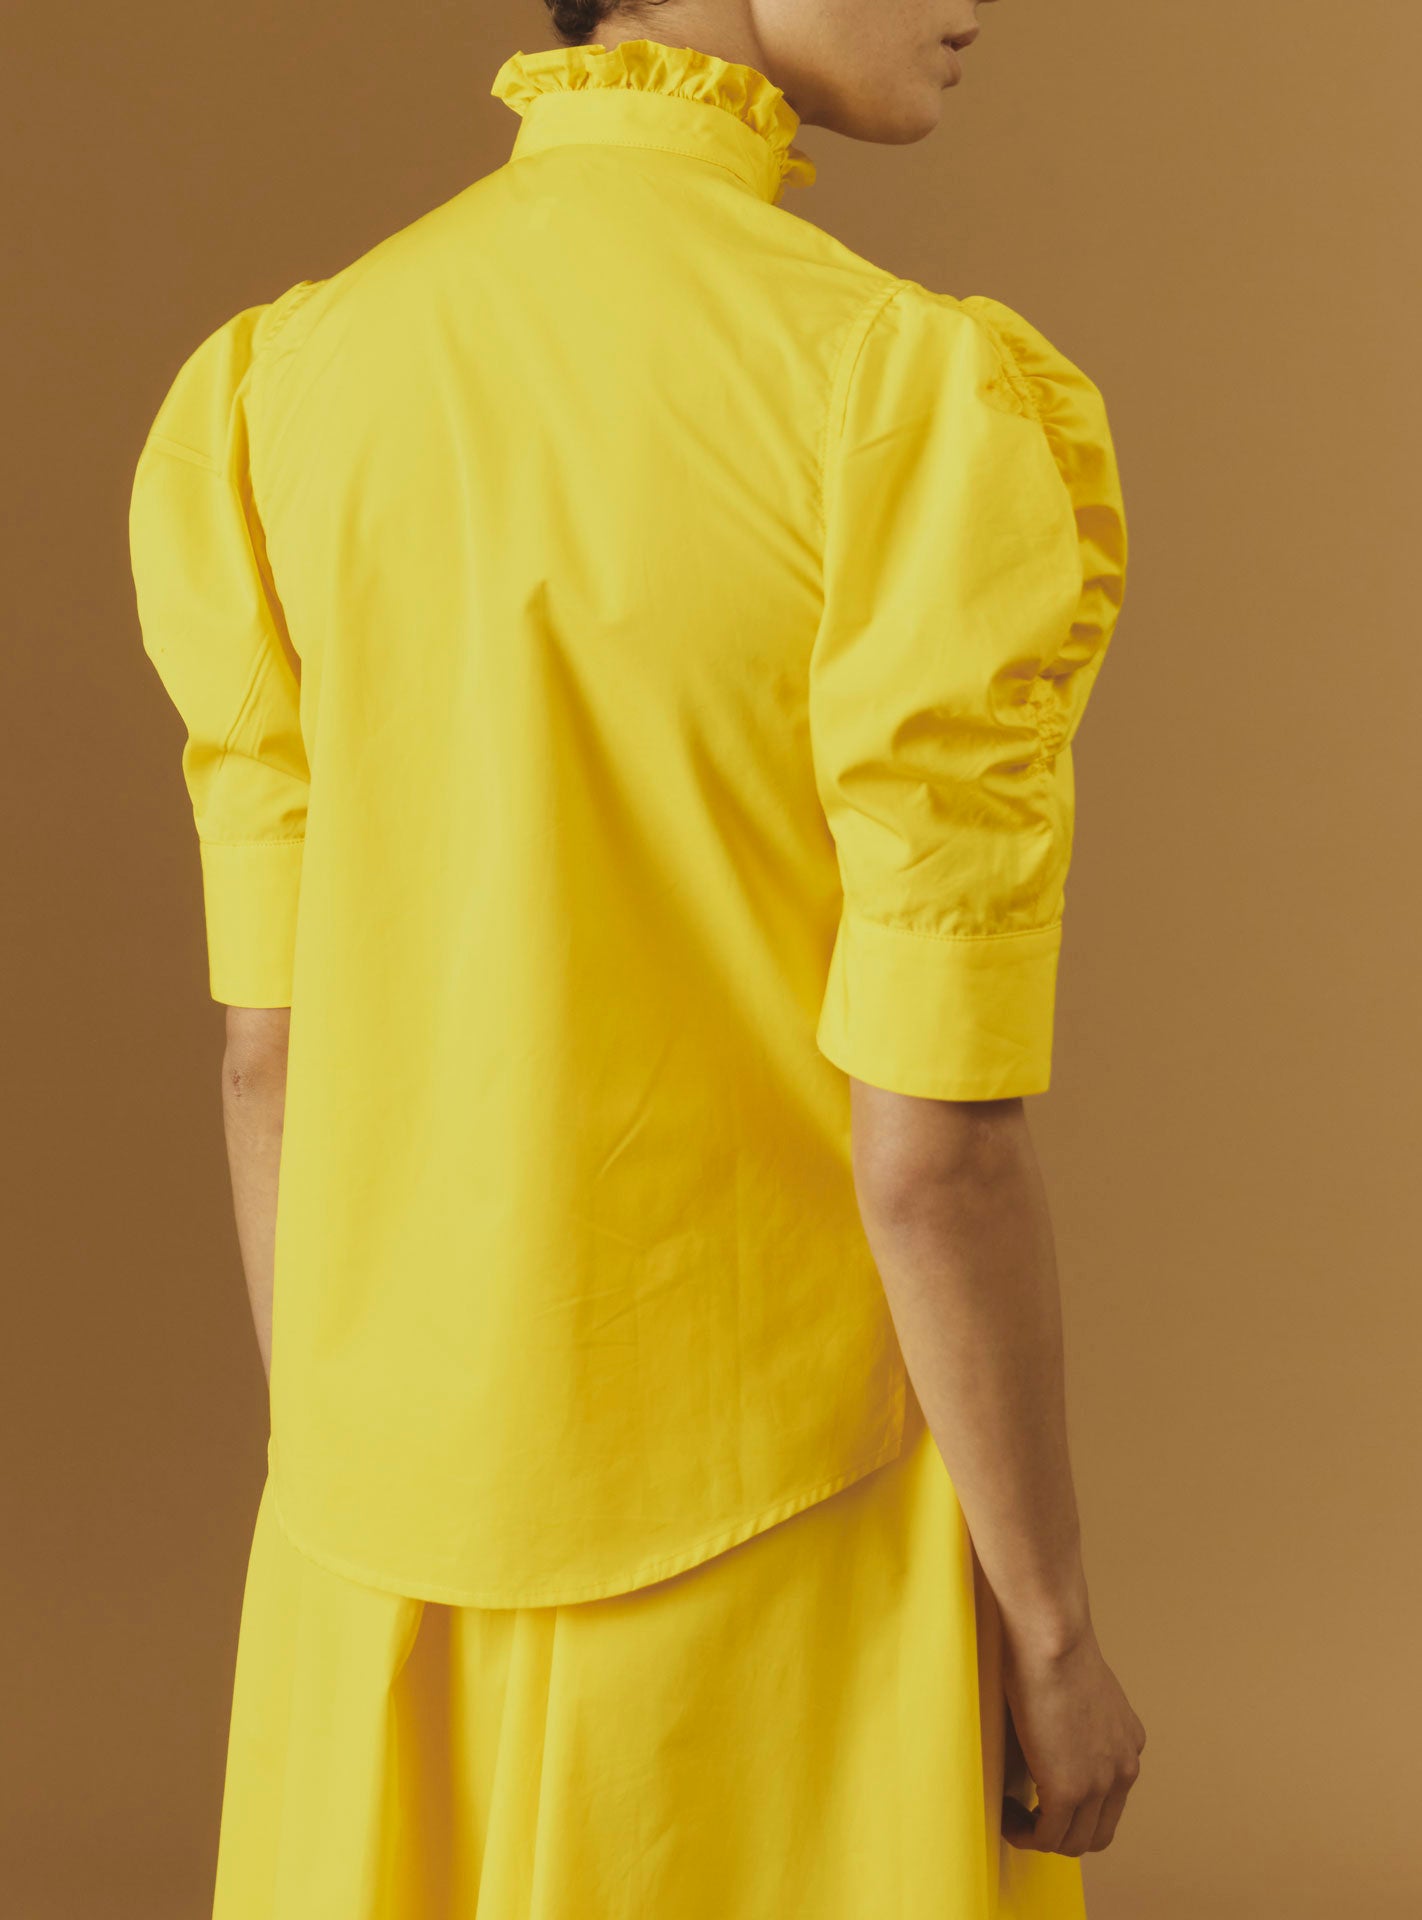 Back view of Vita yellow blouse plain poplin by Thierry Colson